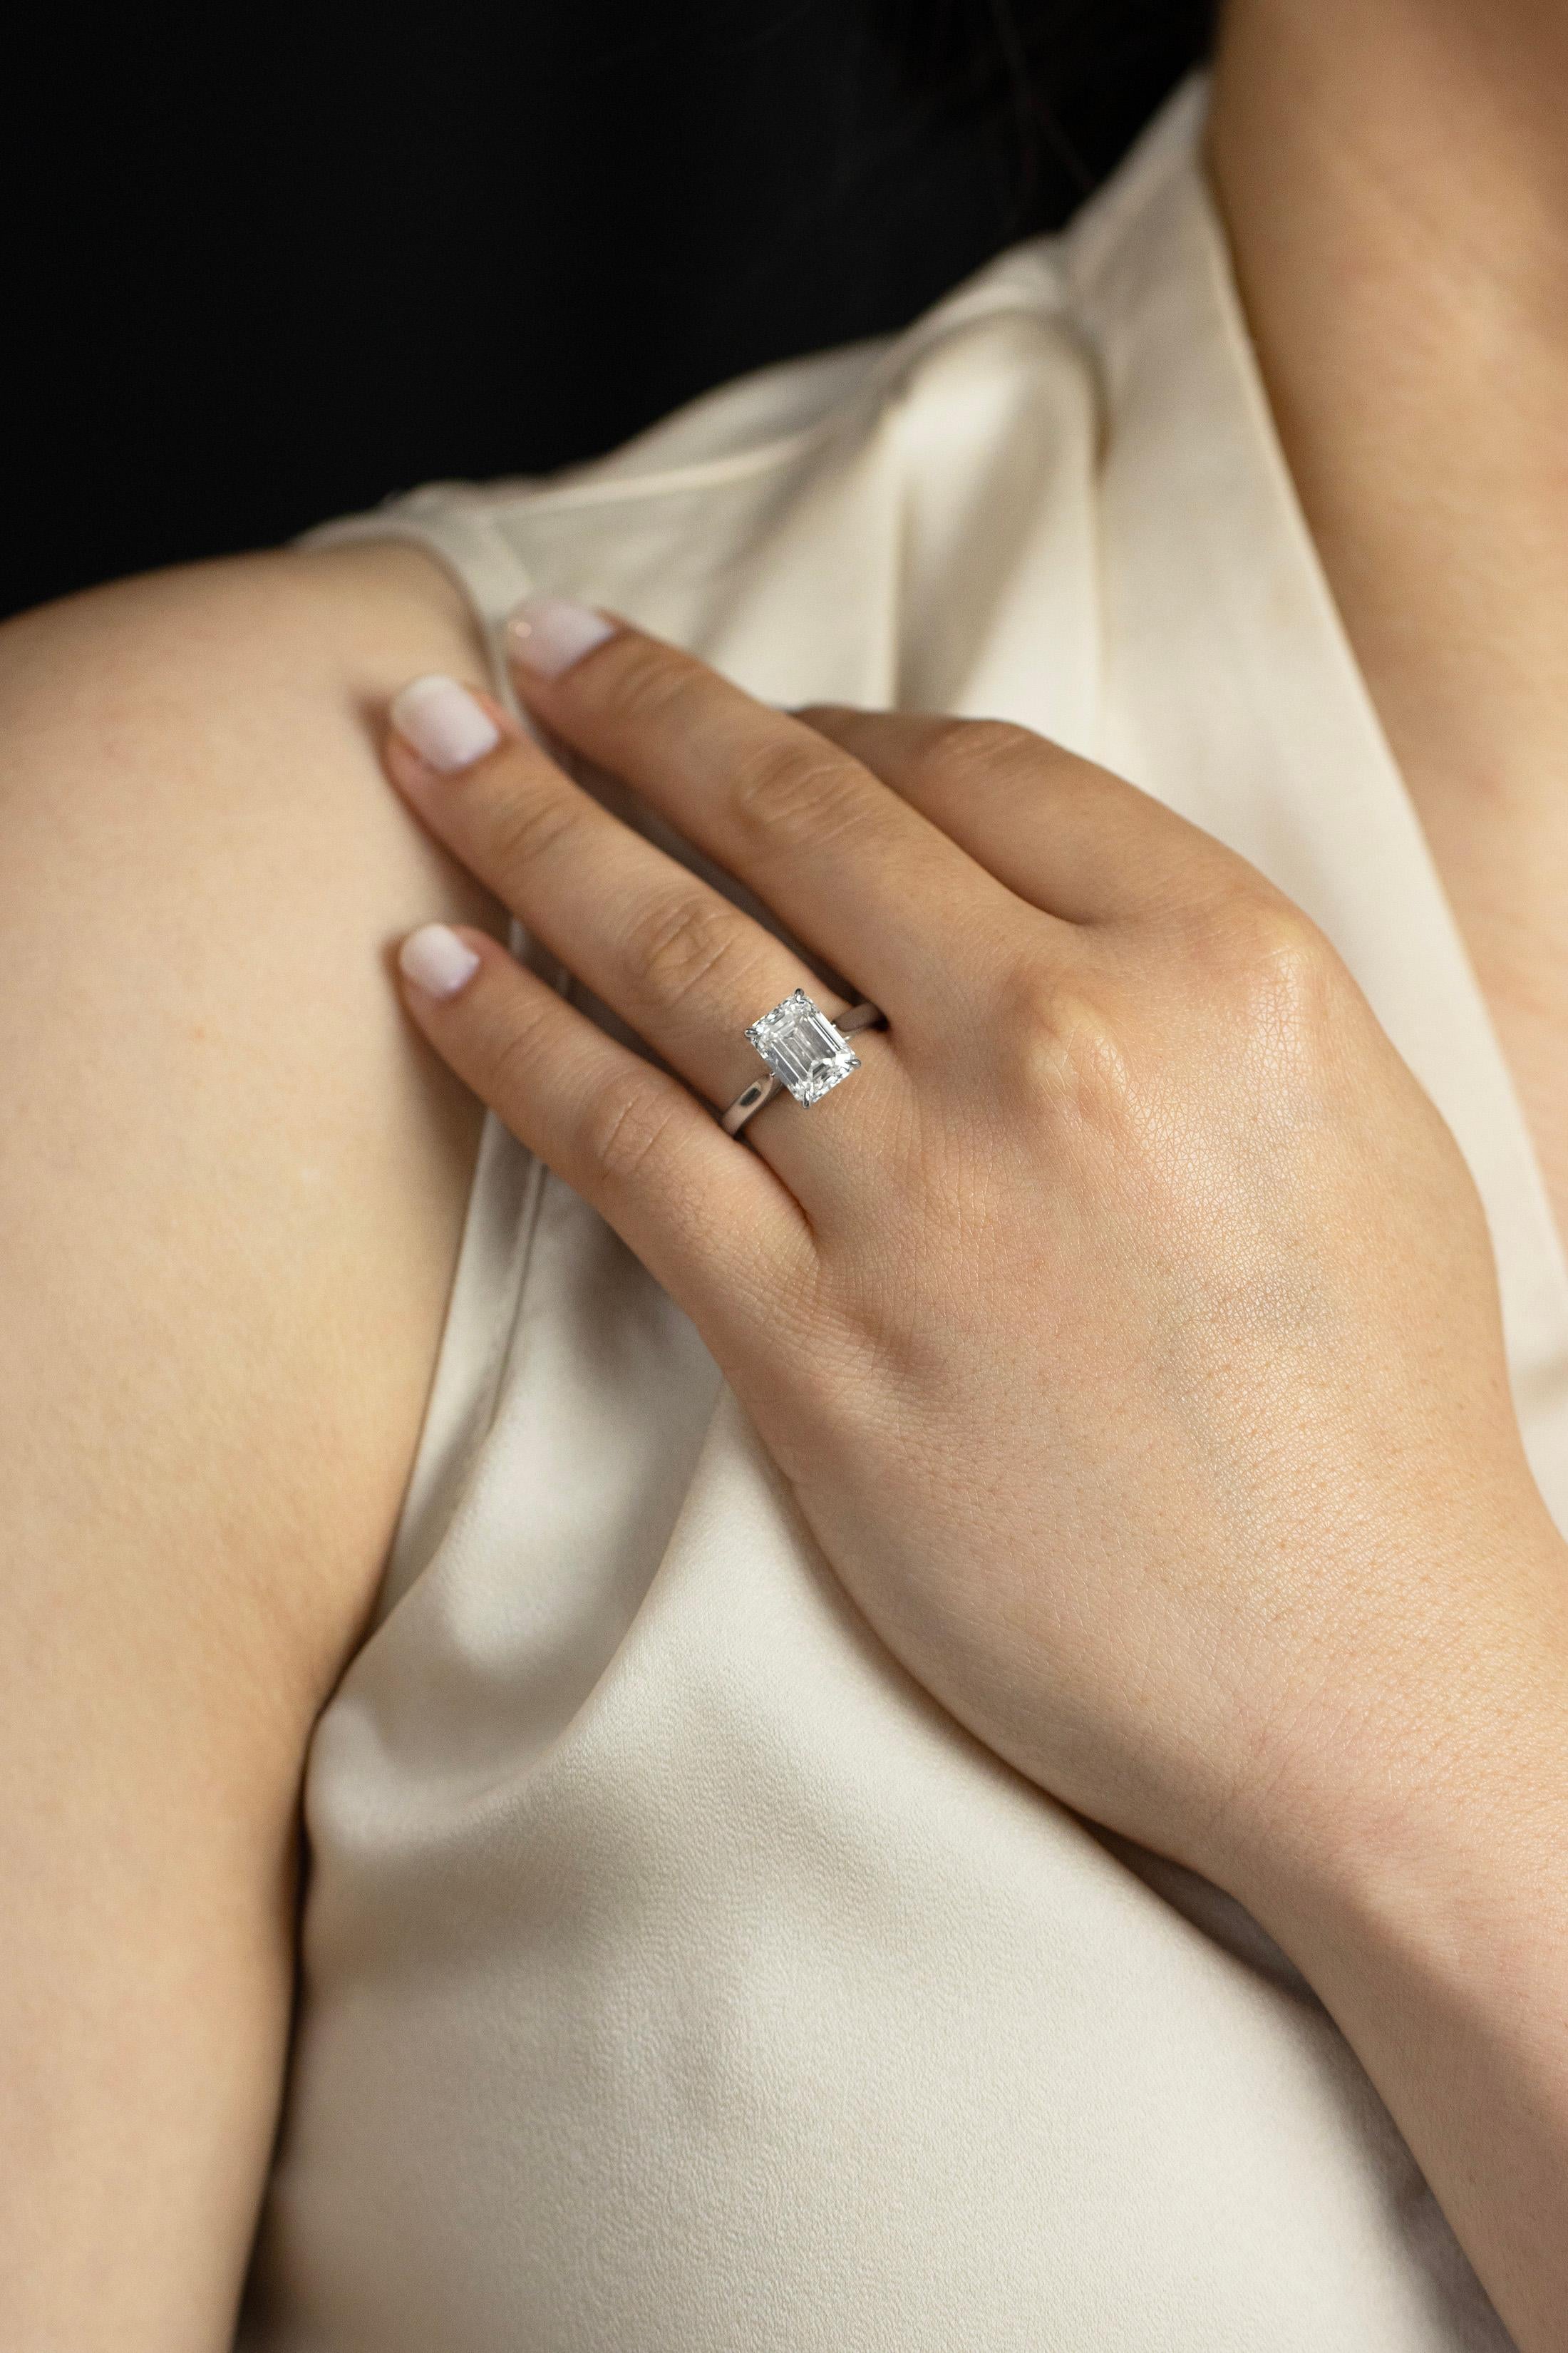 3.3 carat emerald cut diamond ring